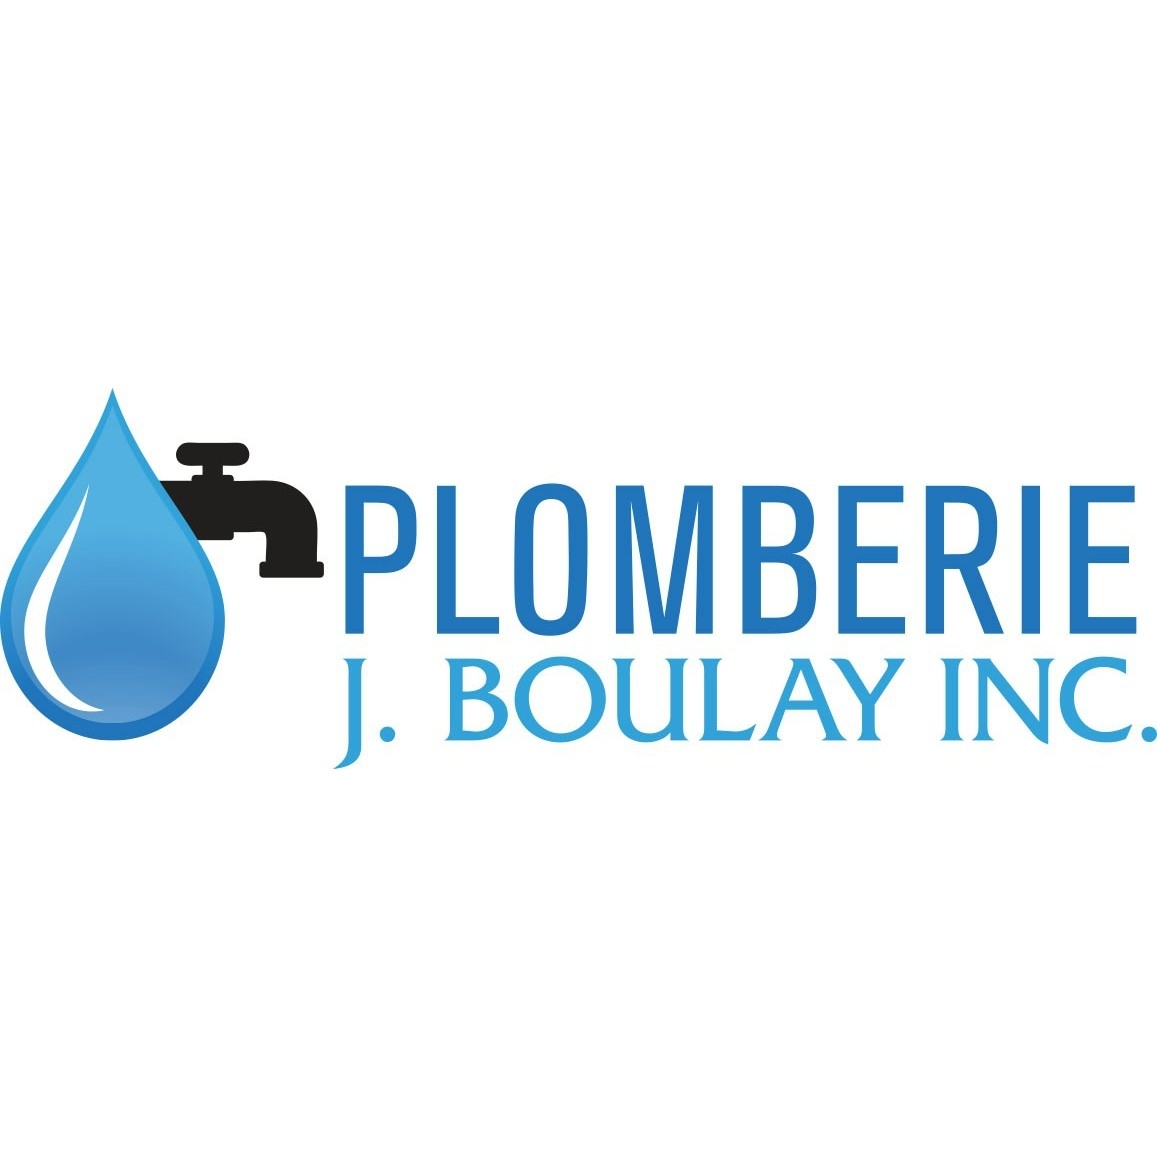 Plomberie J. Boulay inc. - Plombiers et entrepreneurs en plomberie